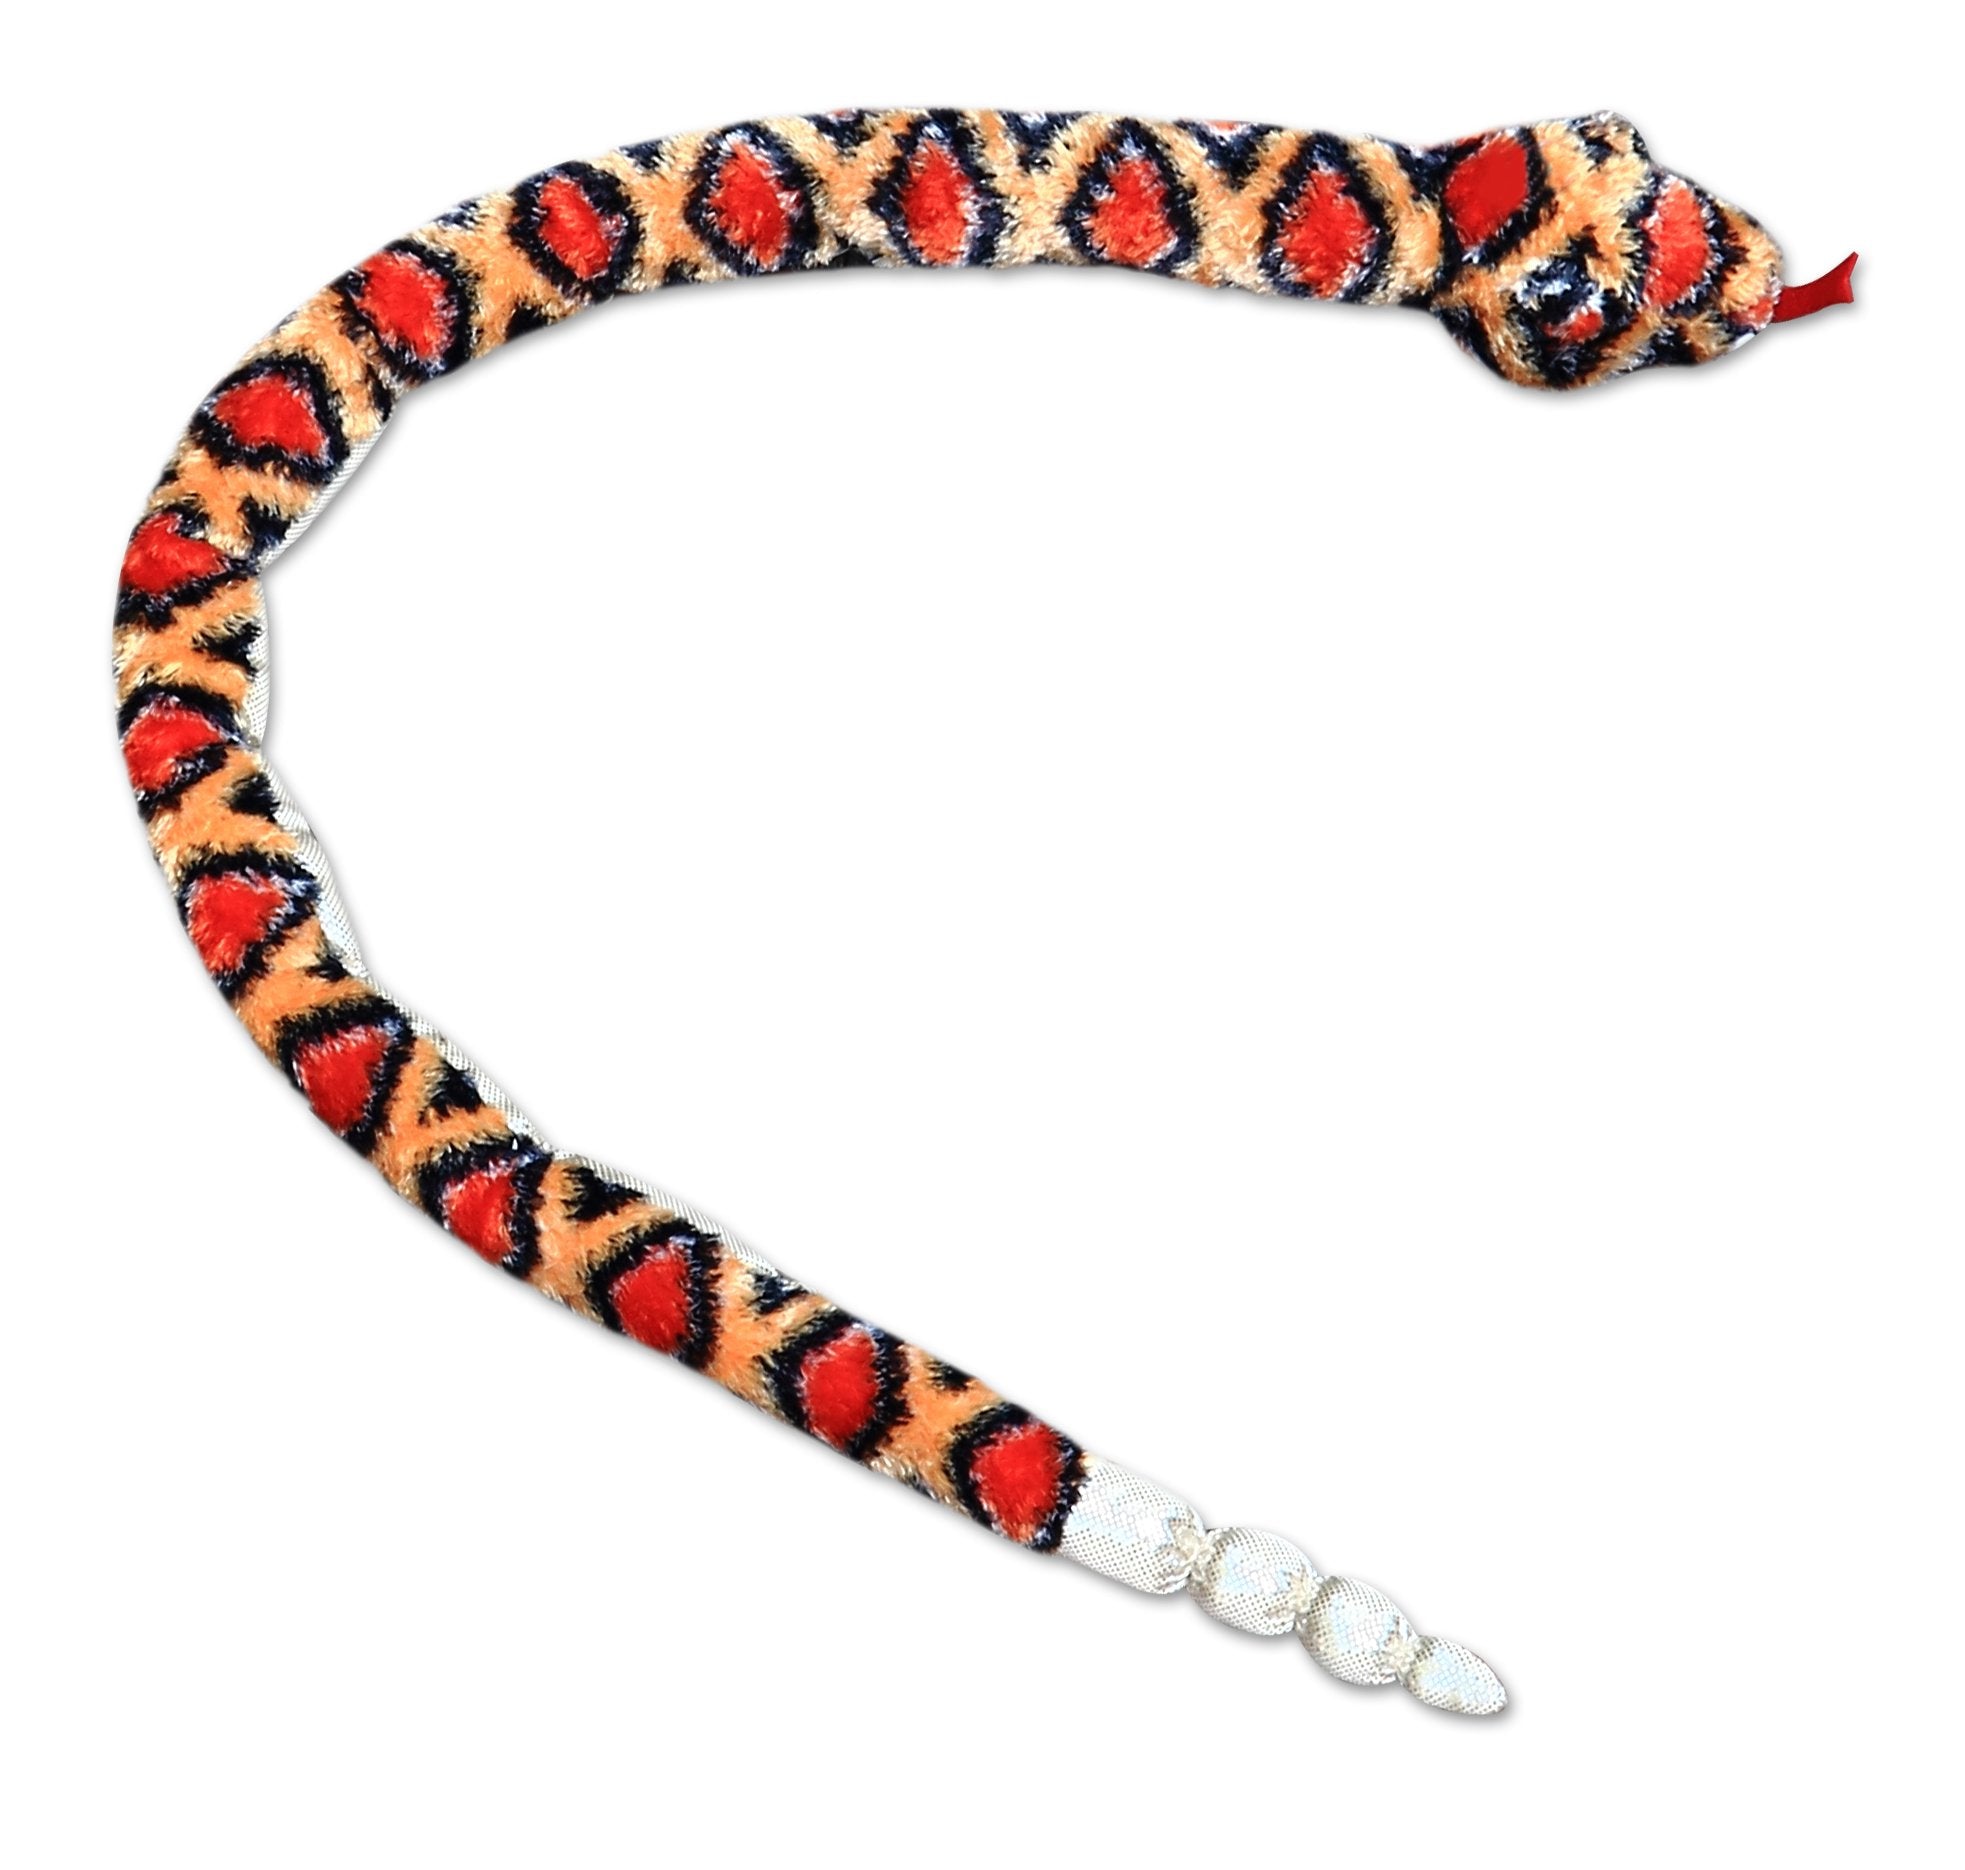 Diamond Back Rattle Snake | Aurora Kaboodles Toy Store - Victoria